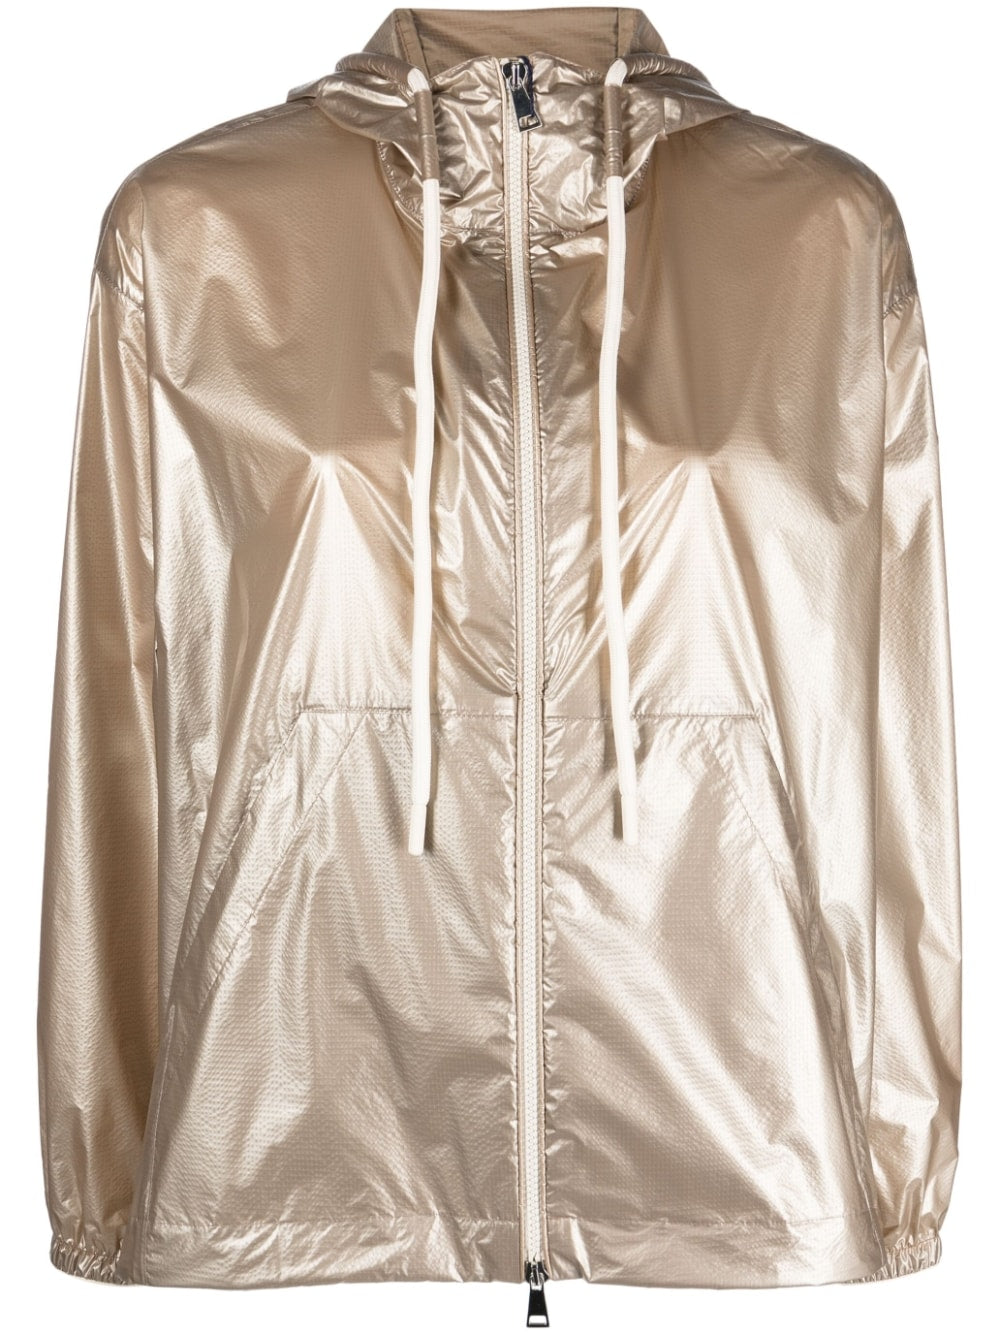 Tazenat zip-up hooded jacket